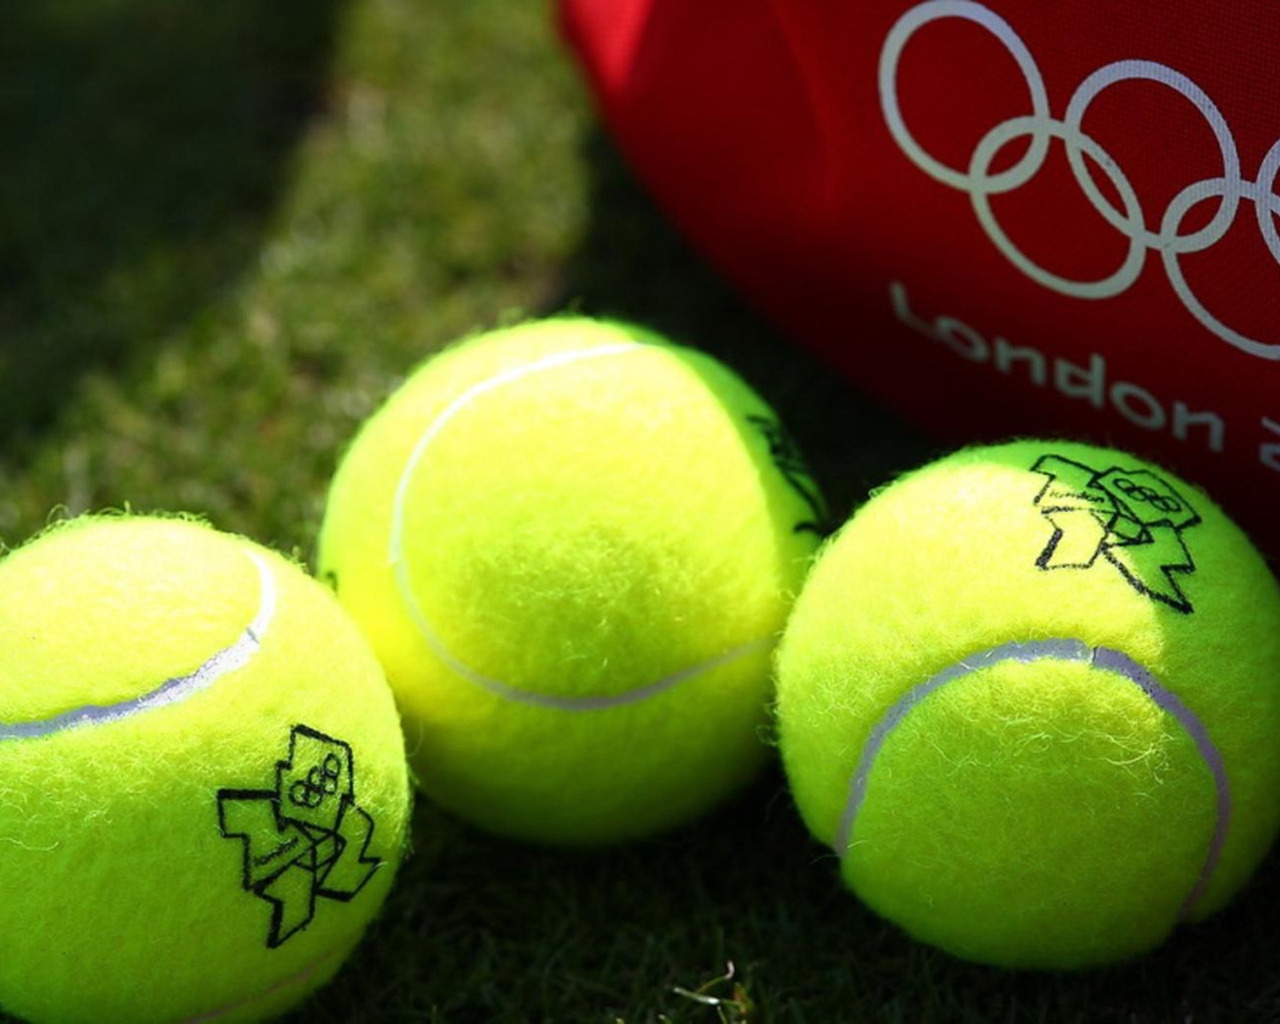 London 2012 Olympics Tennis Balls for 1280 x 1024 resolution